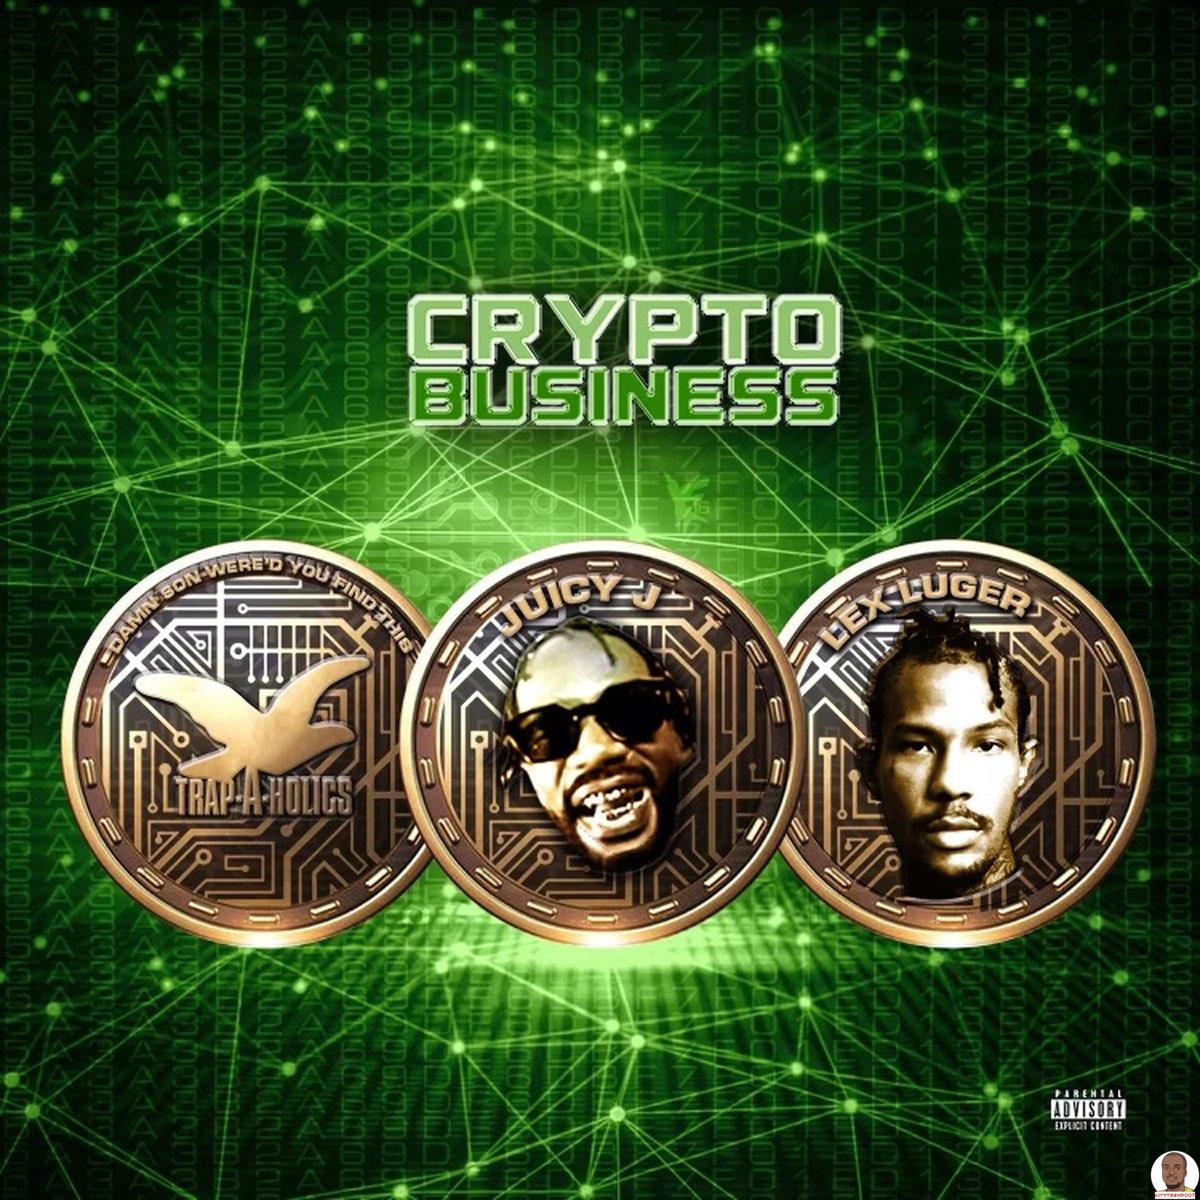 Download Juicy J Lex Luger Trap A Holics — Crypto Business Album